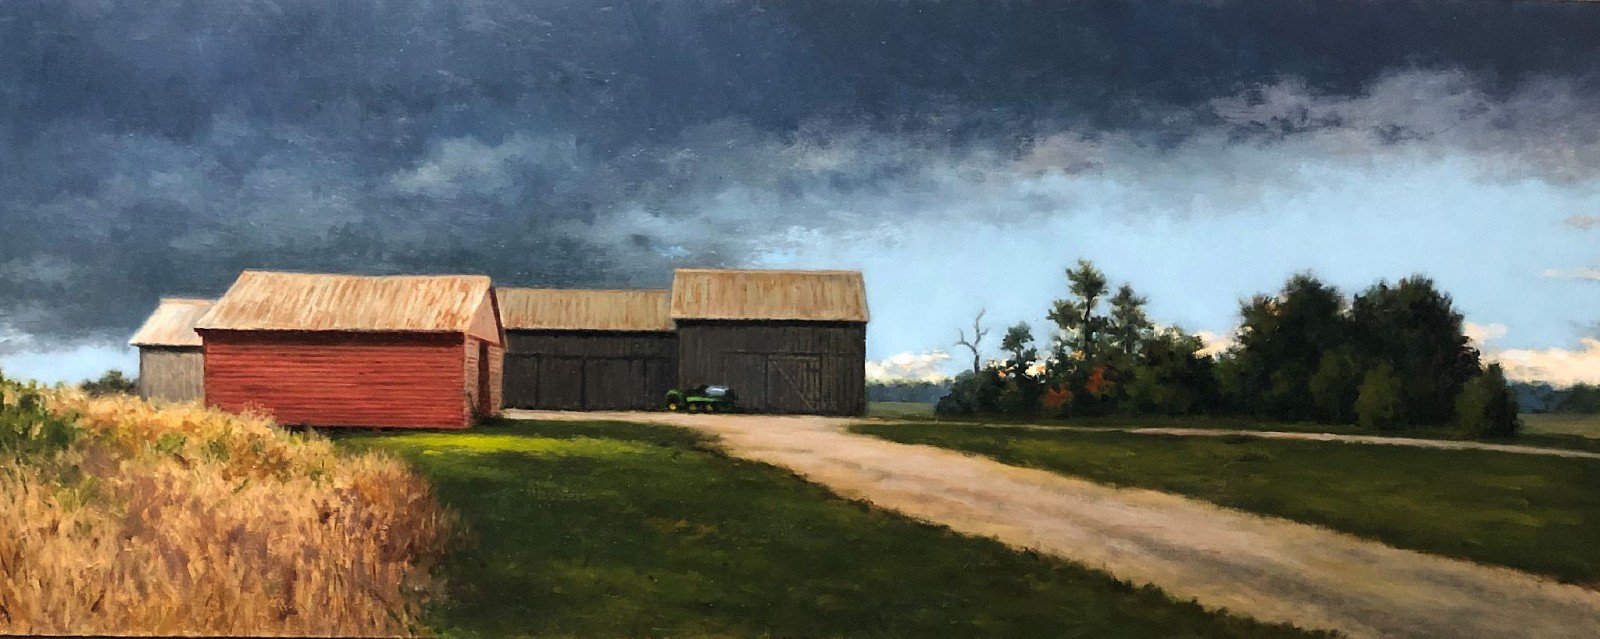 David Peikon, Last Stand, Storm Light, 2019
oil on panel, 12 x 30 in. (30.5 x 76.2 cm)
DP200119